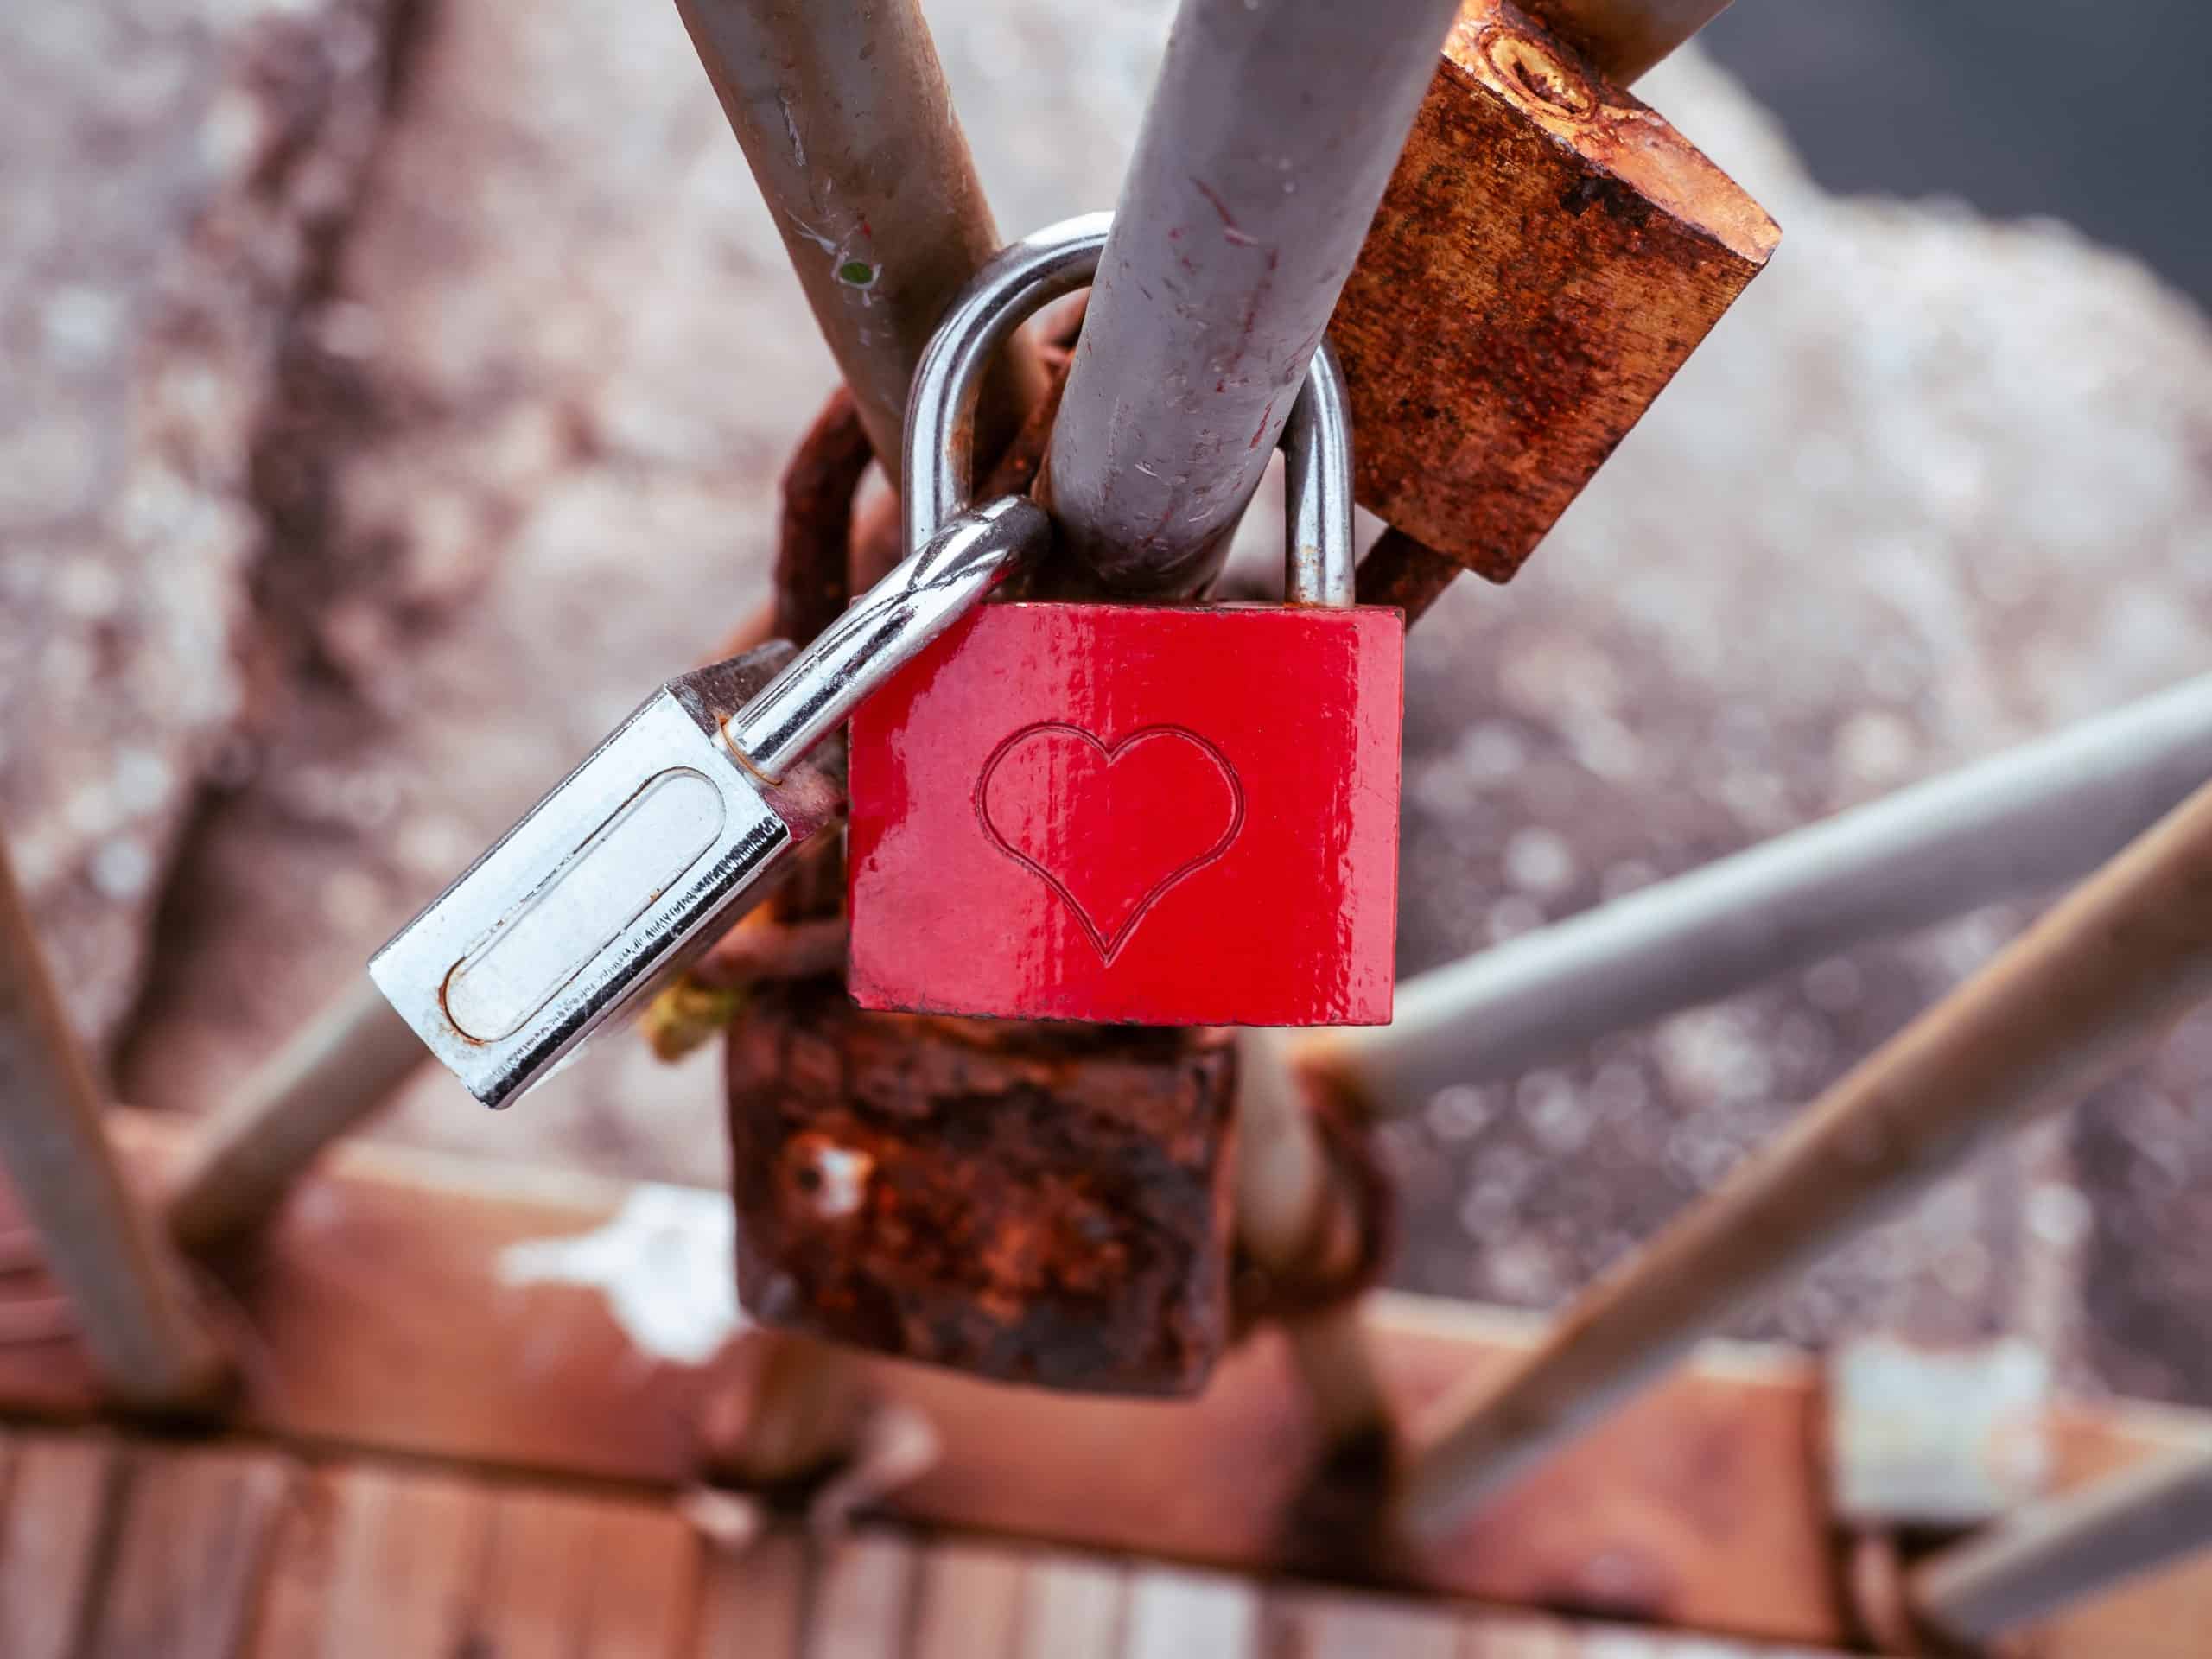 Red love lock with heart symbol, locked on a bridge rail.